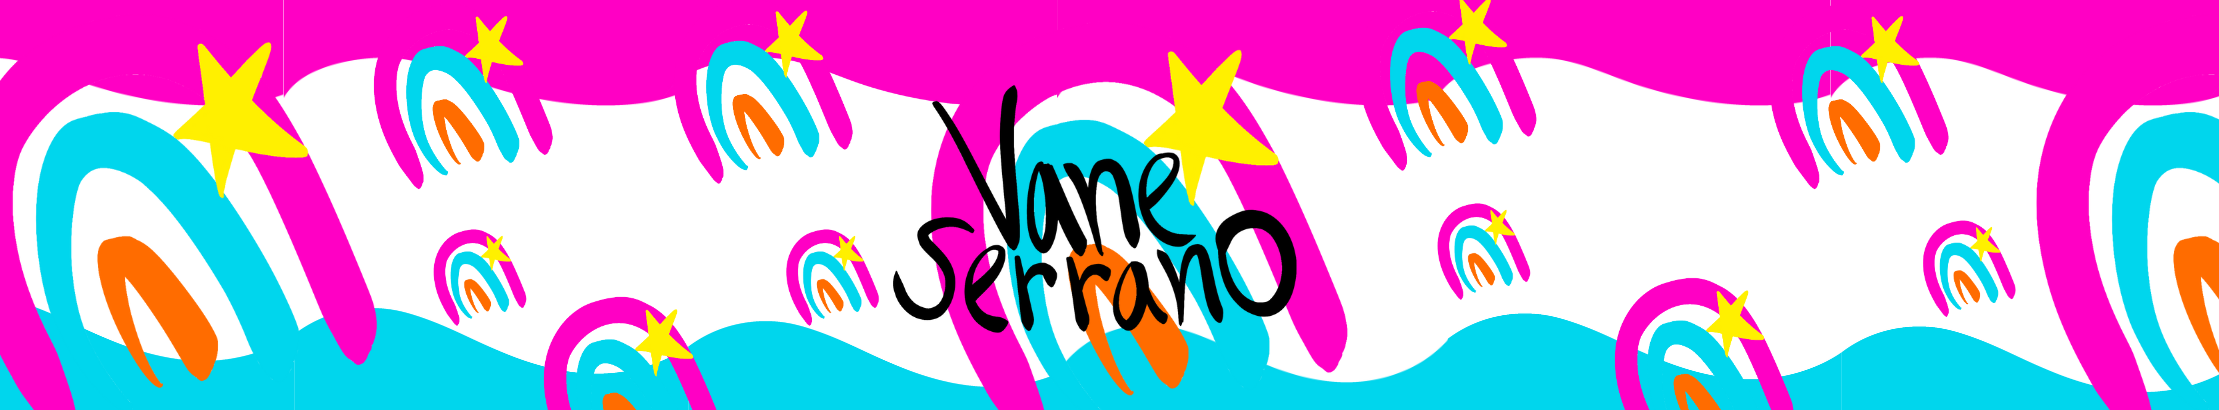 Vane Serrano's profile banner